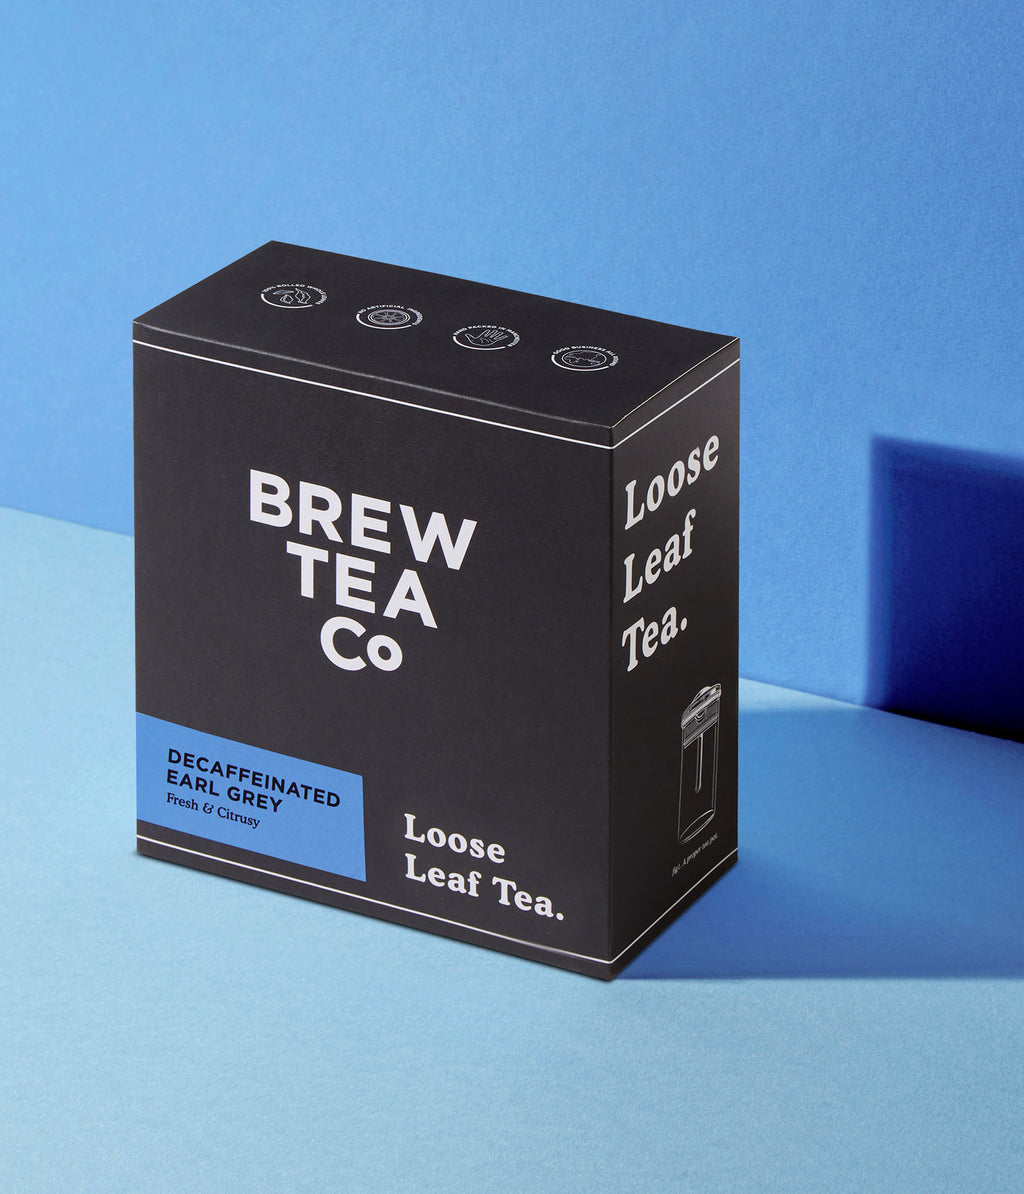 Decaffeinated Earl Grey - Loose Leaf Tea